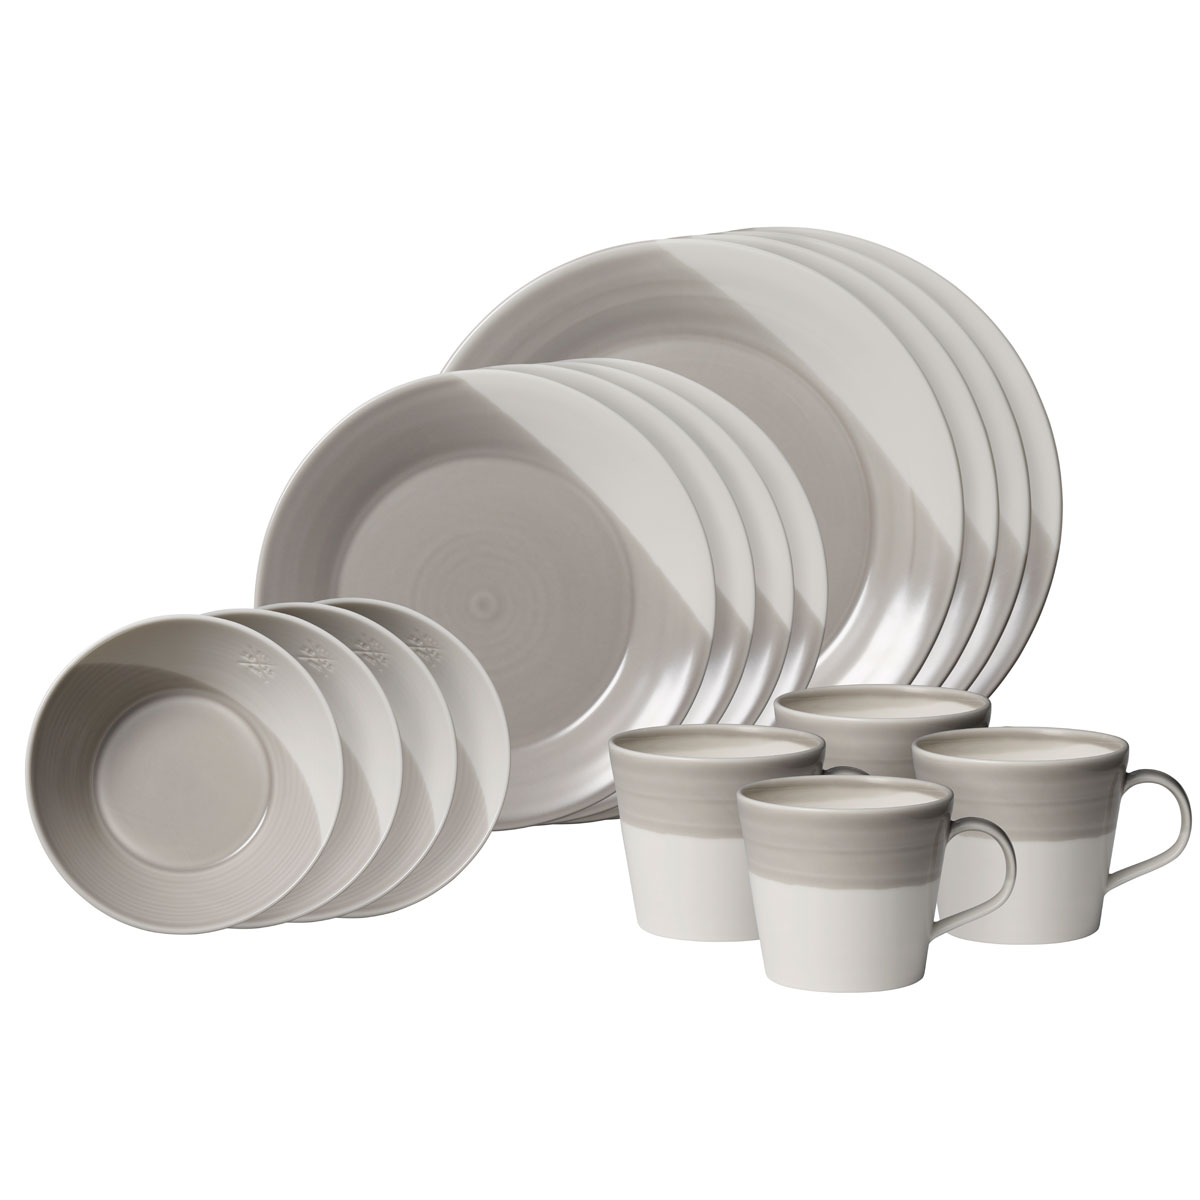 Royal Doulton Bowls of Plenty 16-Piece Set Grey